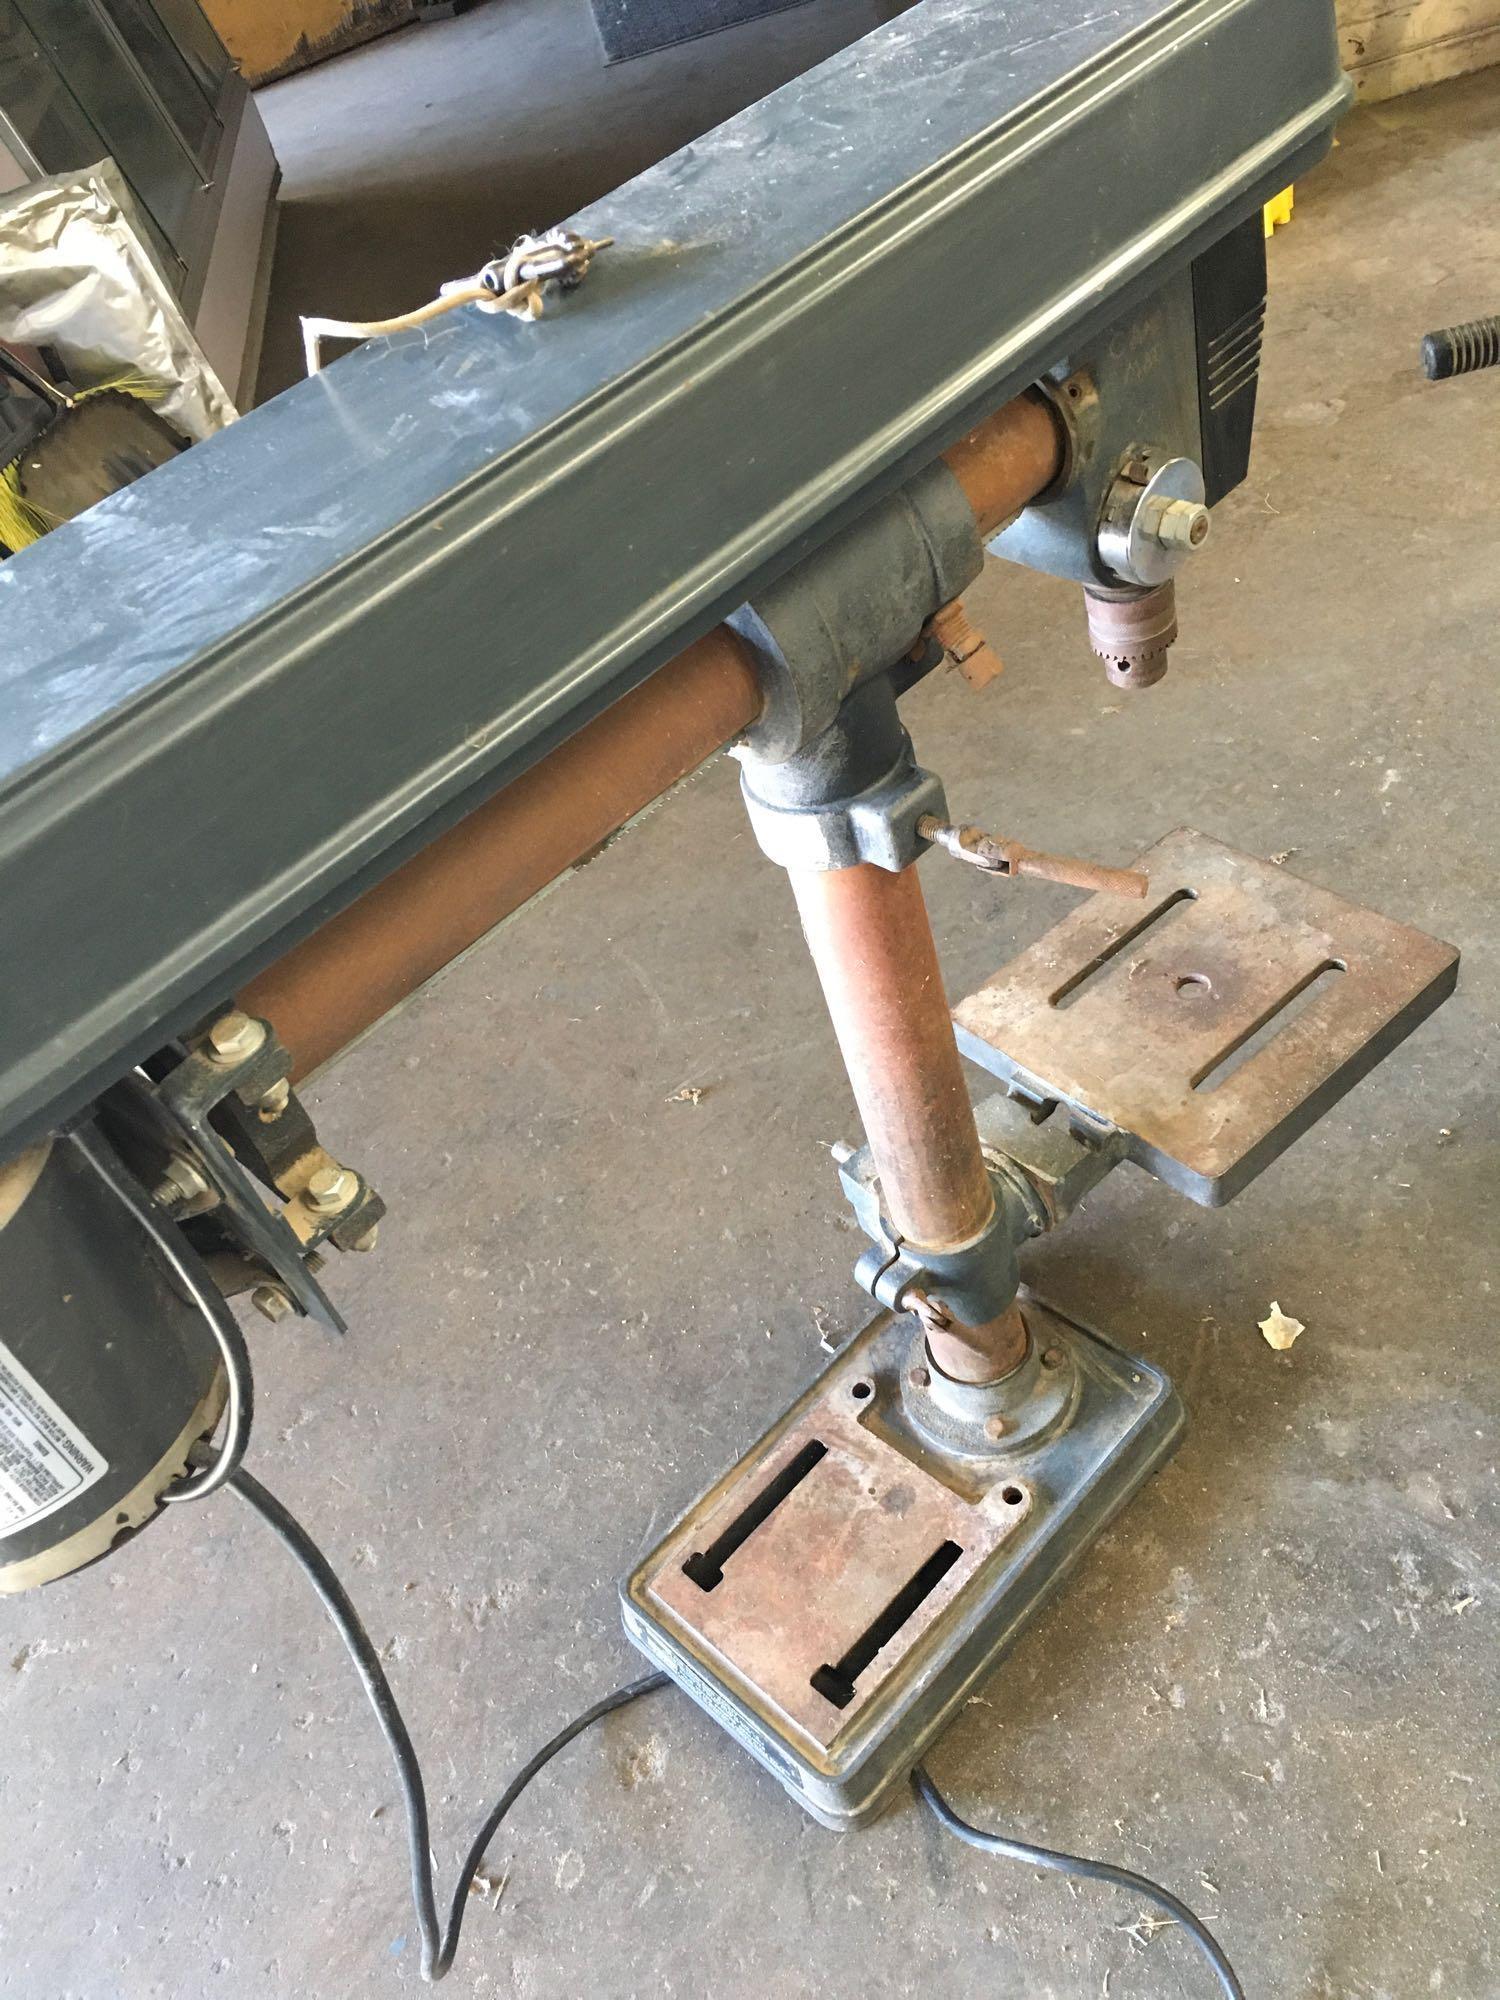 Craftsman 34" radial drill press model 149.21334. Works